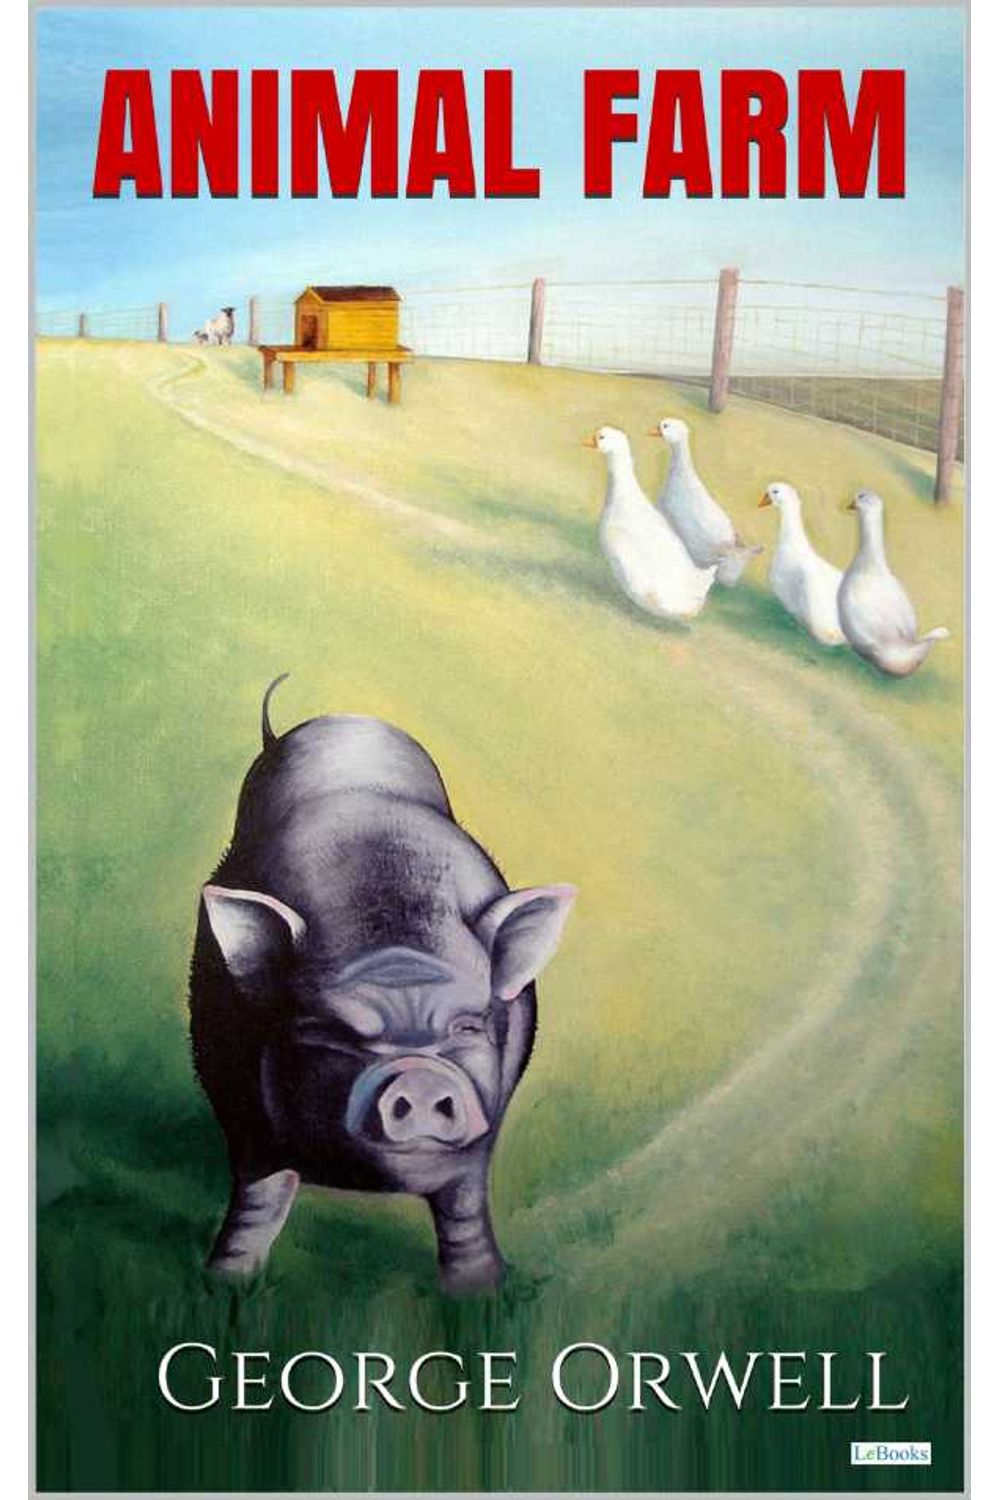 bw-animal-farm-orwell-lebooks-editora-9786586079500